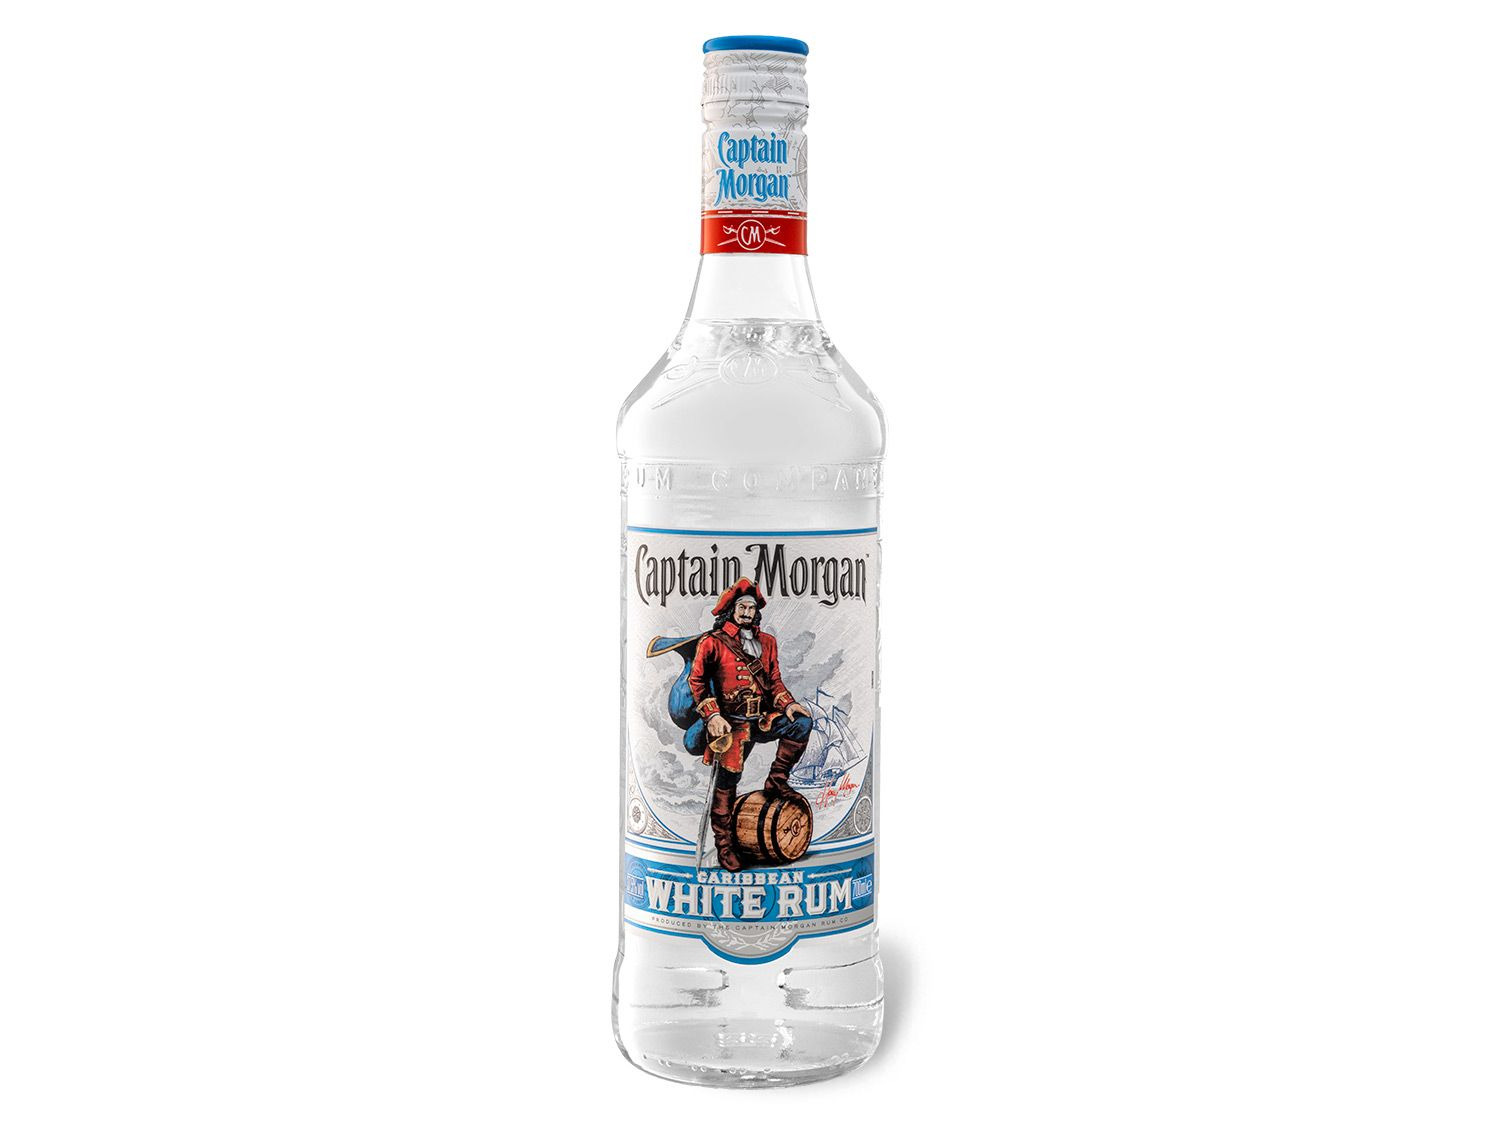 Morgan Captain online LIDL Vol kaufen 37,5% White Rum |